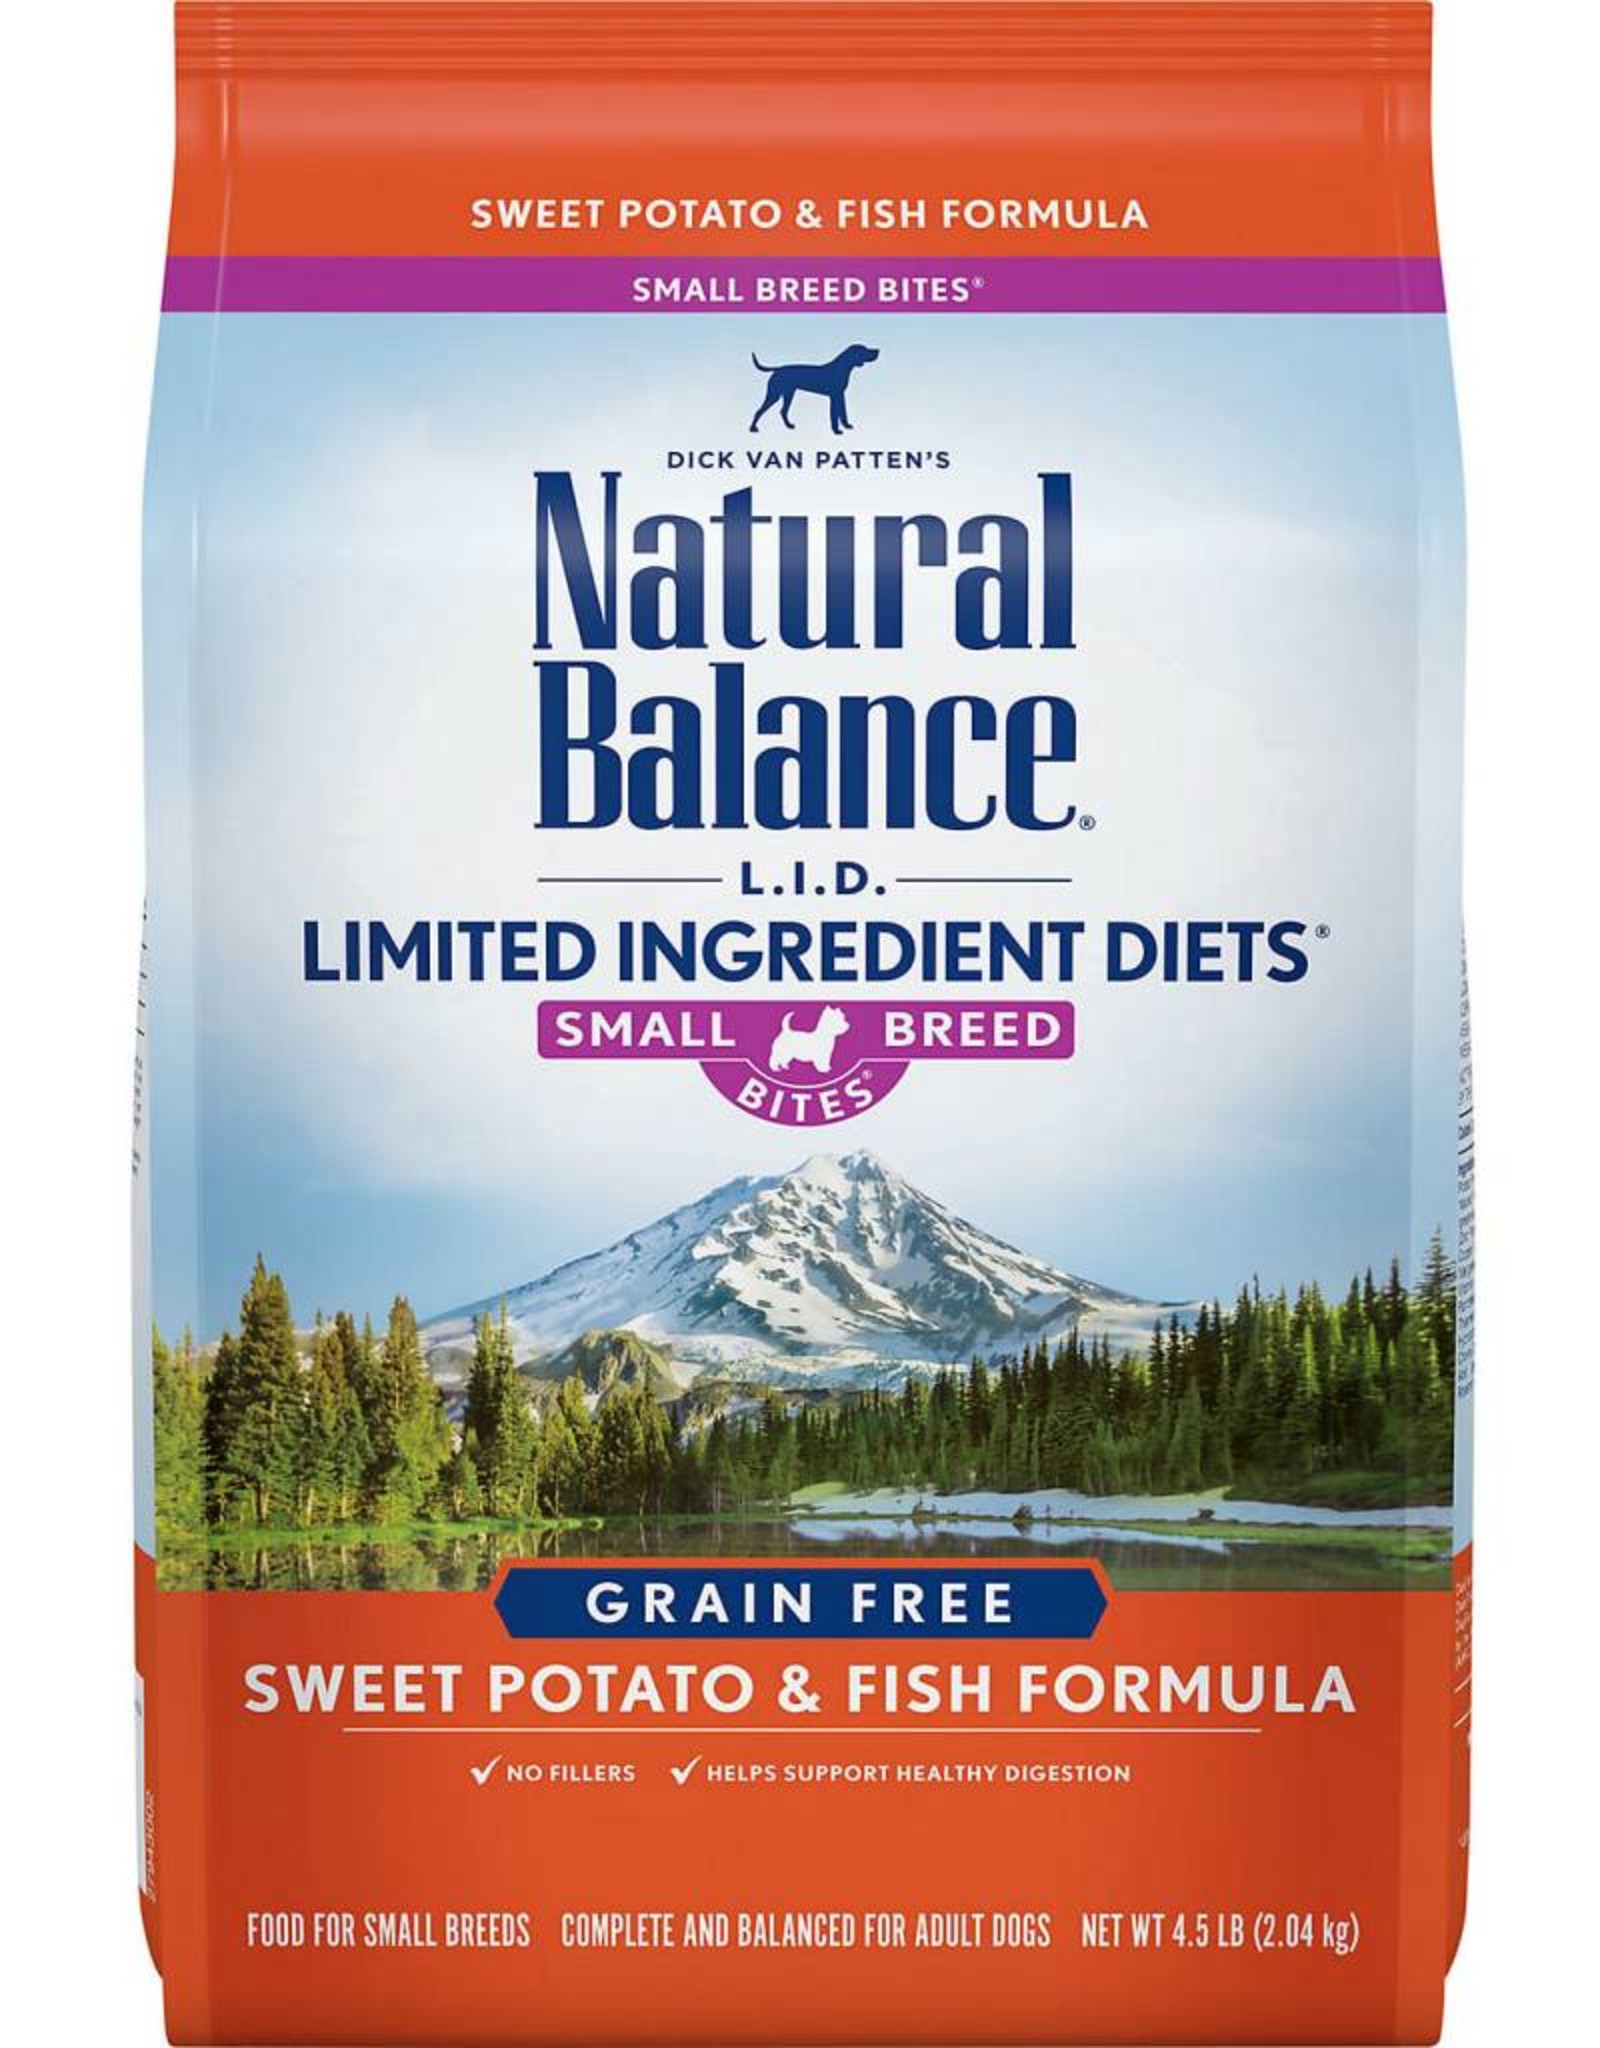 Natural Balance Natural Balance Limited Ingredient Diets Sweet Potato & Fish Formula Small Breed Bites Grain-Free Dry Dog Food- 4.5 lb. 